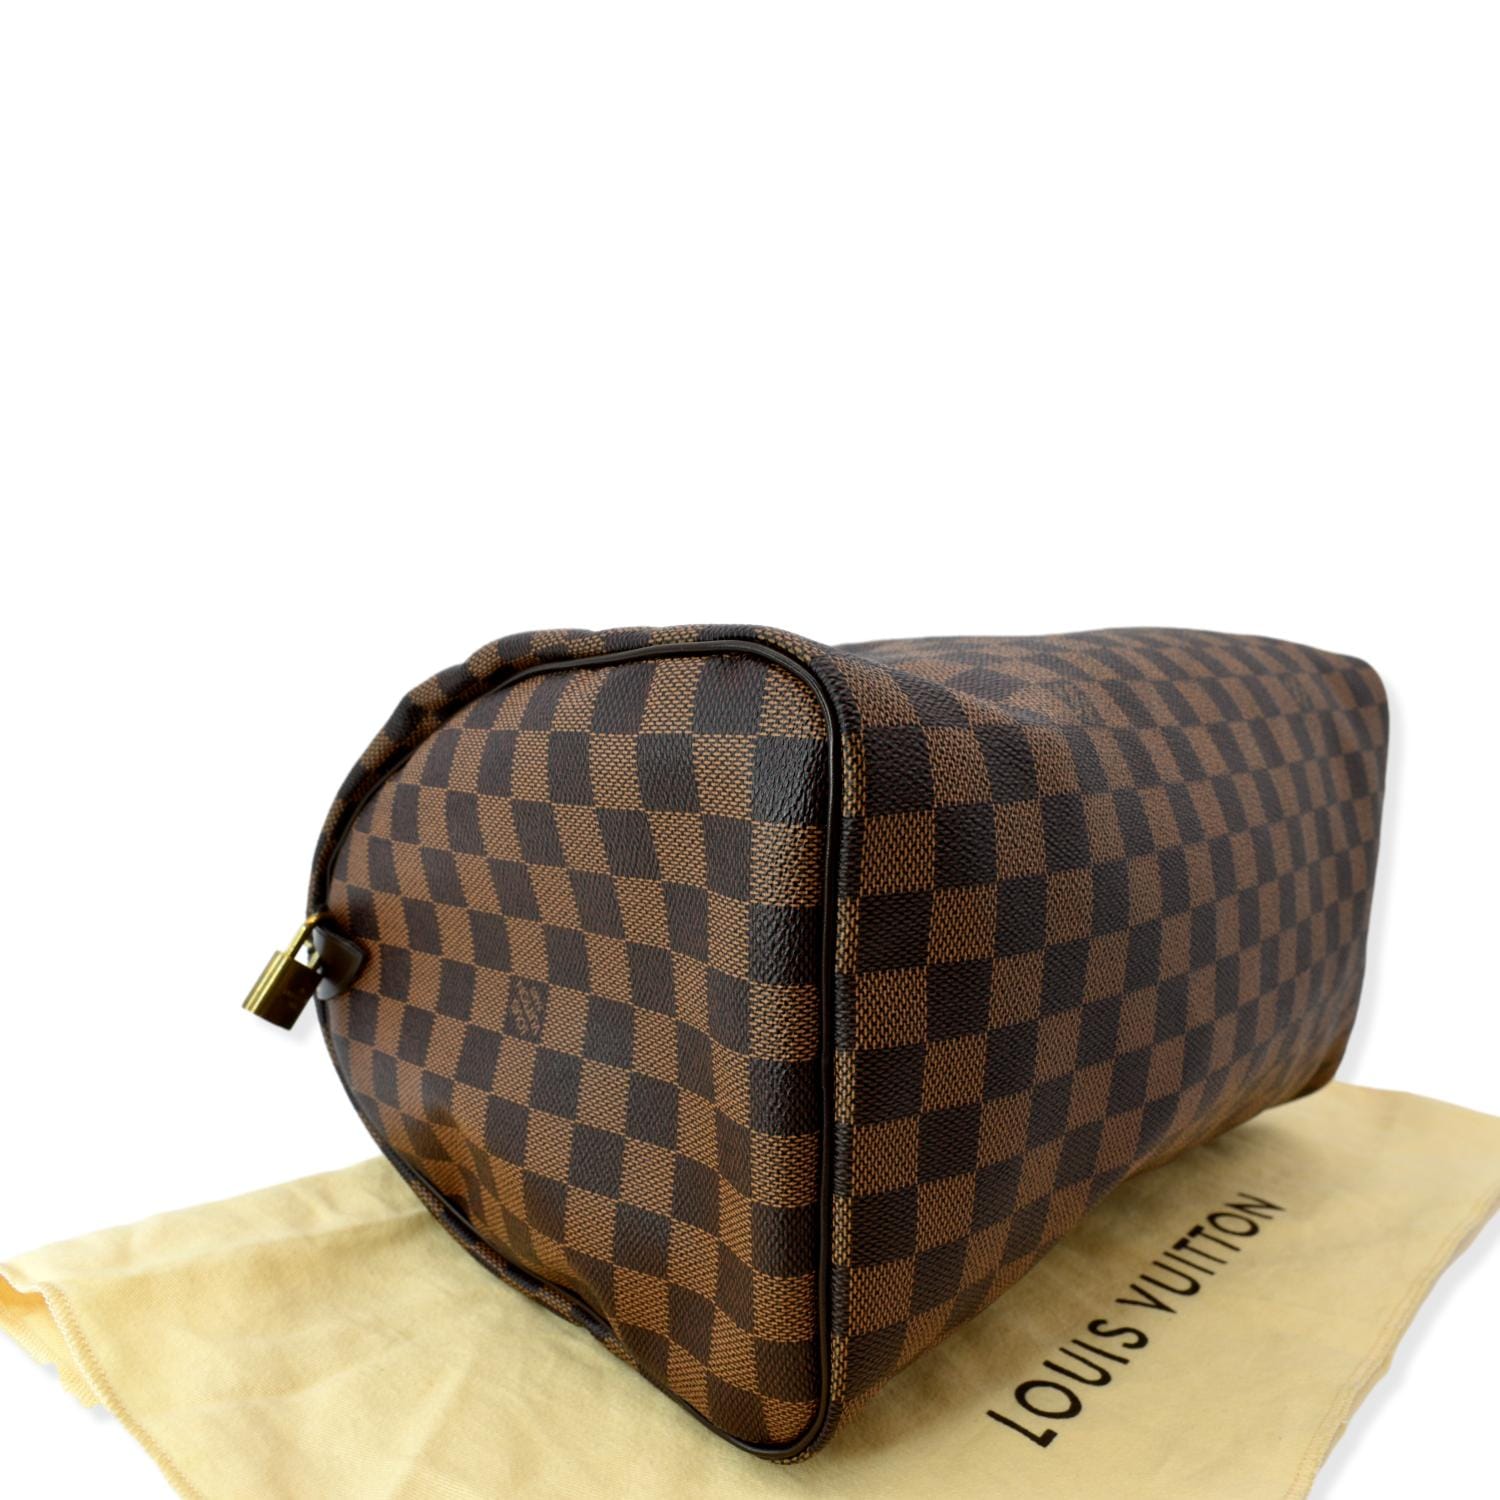 Authentic Louis Vuitton Speedy 35 Damier Ebene Handbag – St